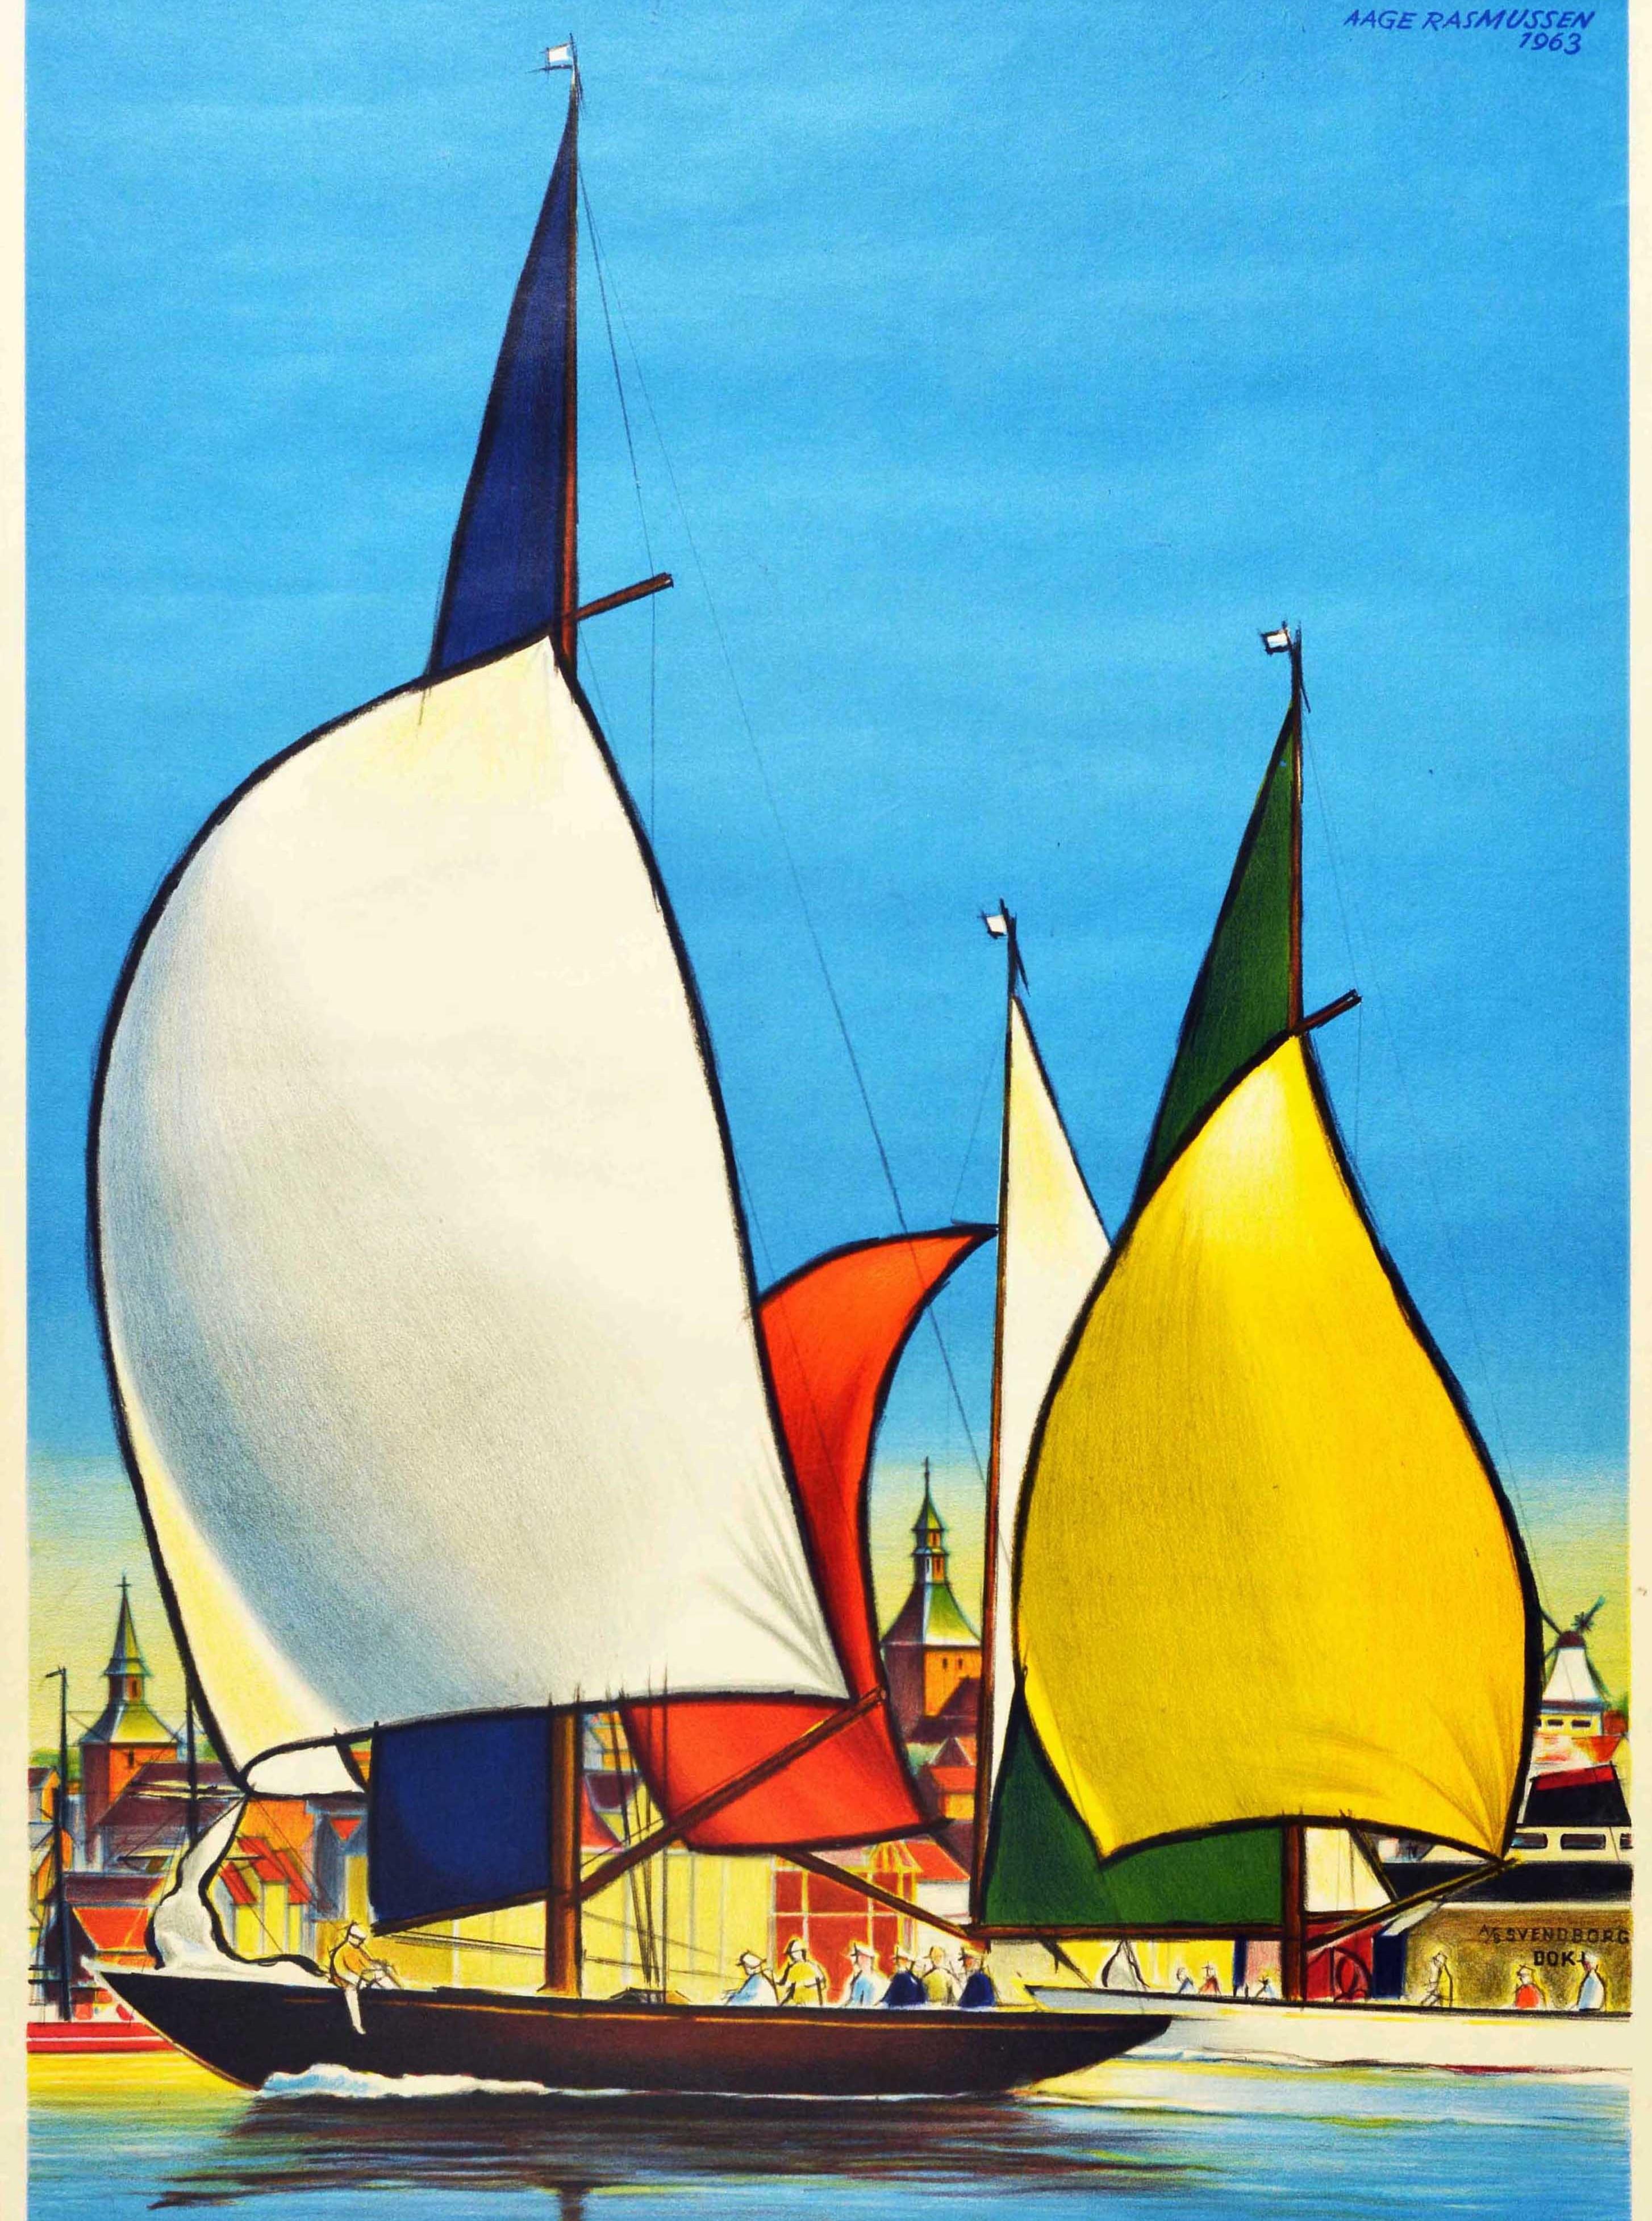 Mid-20th Century Original Vintage Travel Poster Svendborg Danmark Sailing Pleasure Boat Denmark